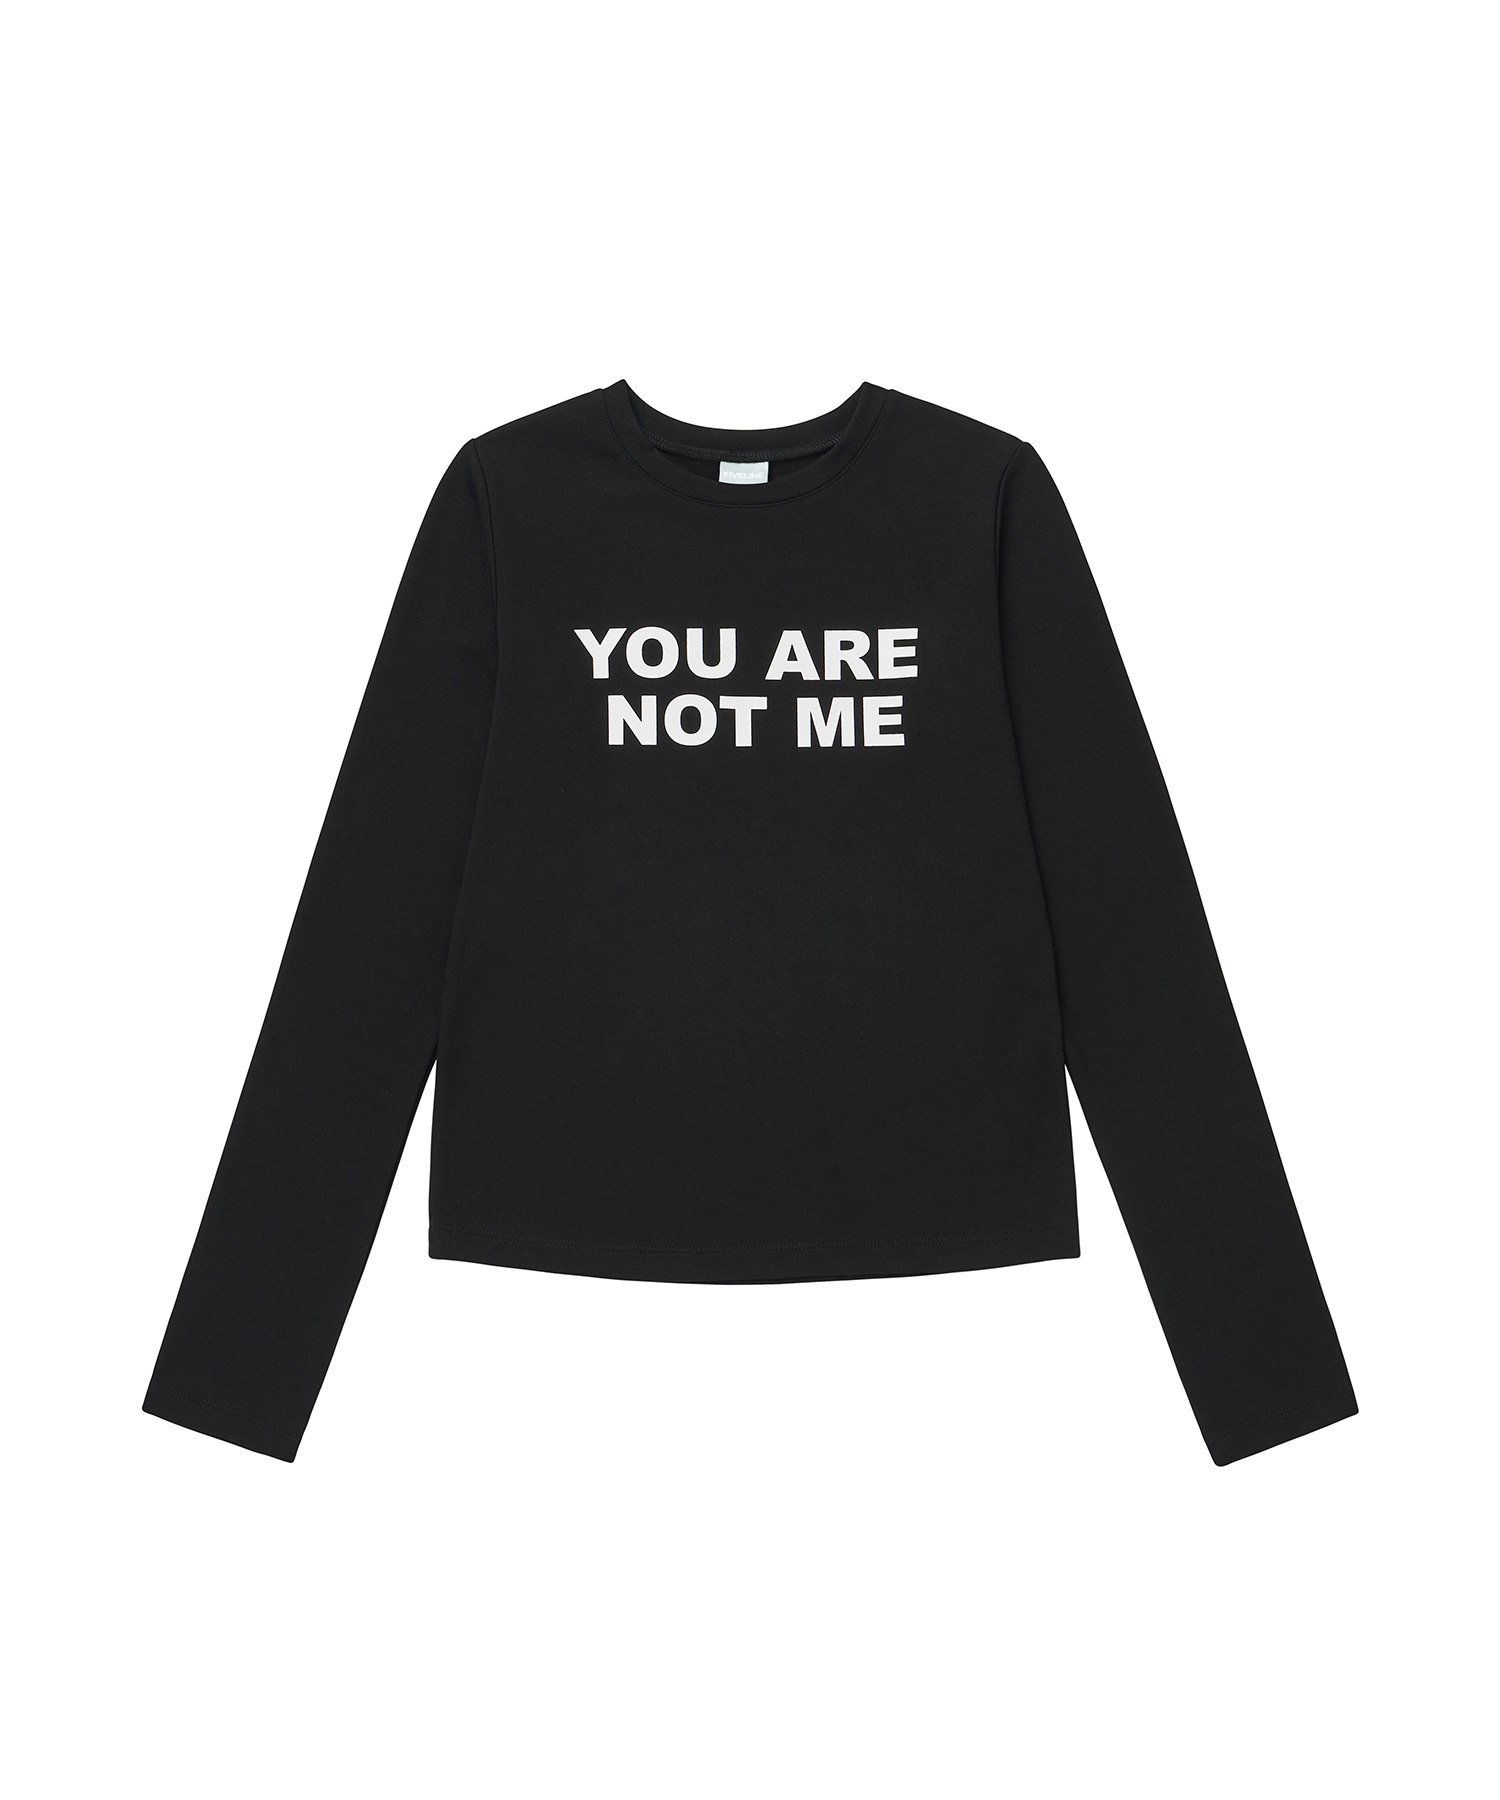 FIVELINE-YOU ARE NOT ME 롱 슬리브 티셔츠 블랙